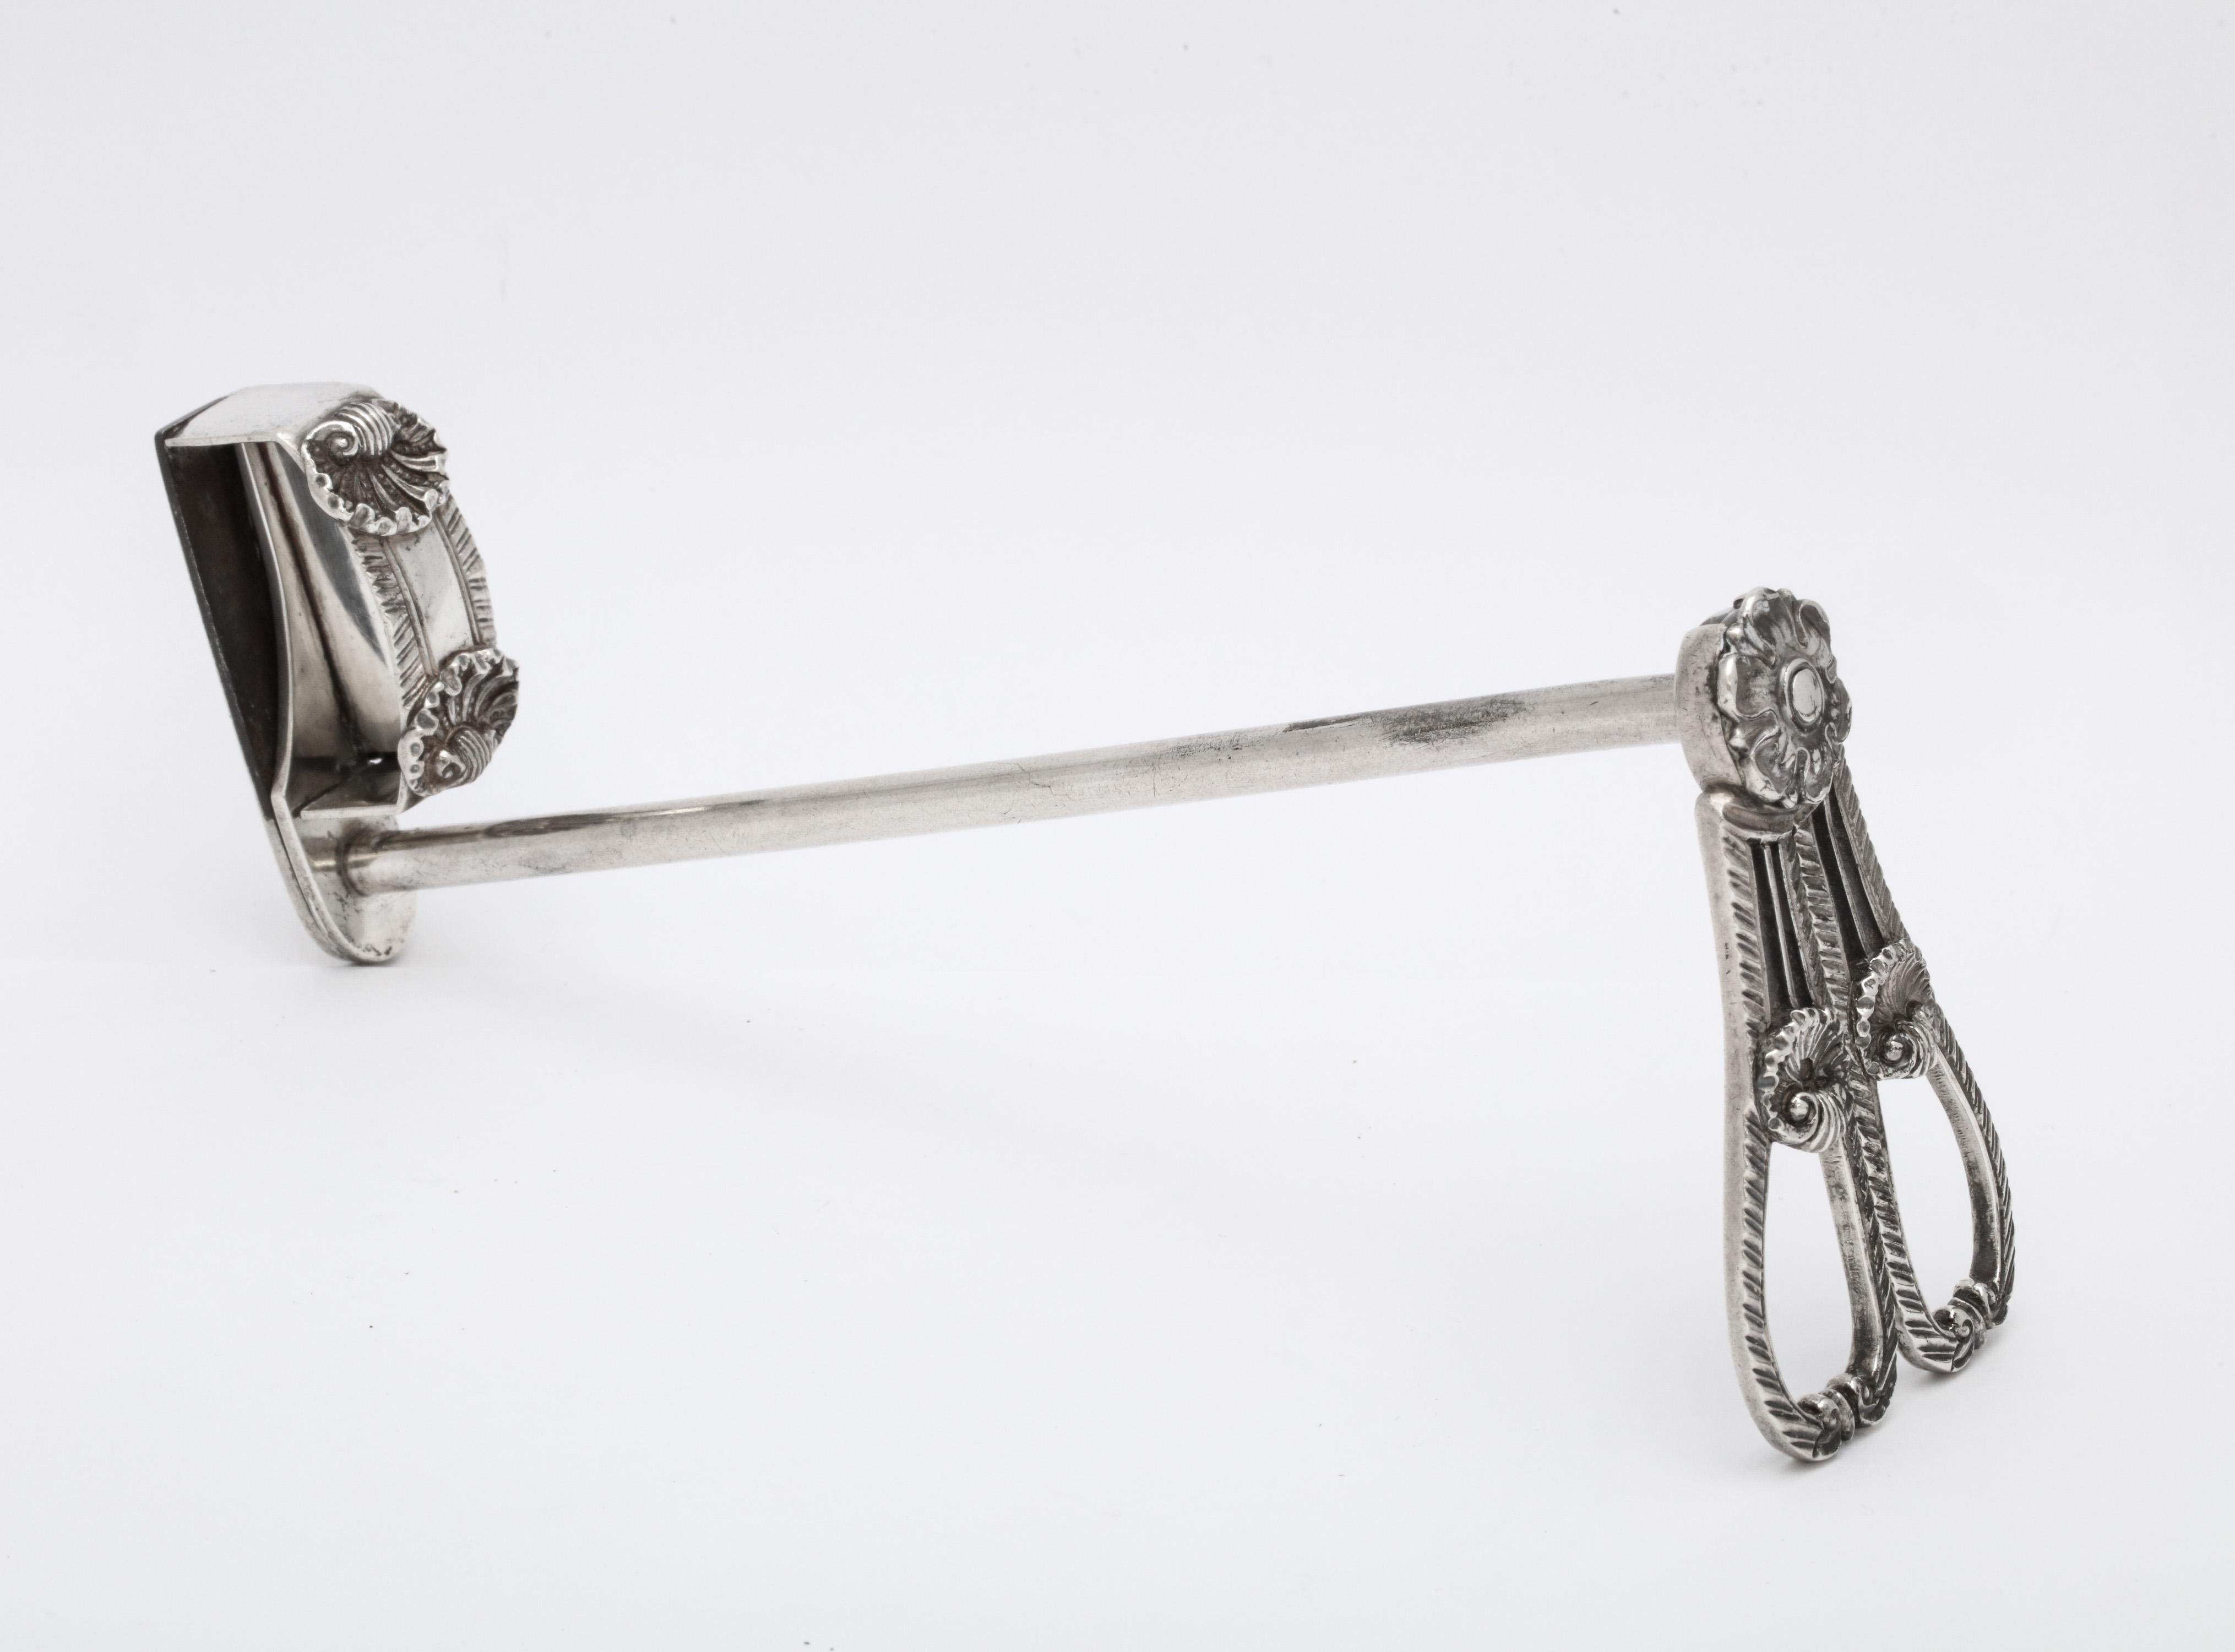 Rare Georgian 'George III' Sterling Silver Candlewick Snuffer/Cutters For Sale 10